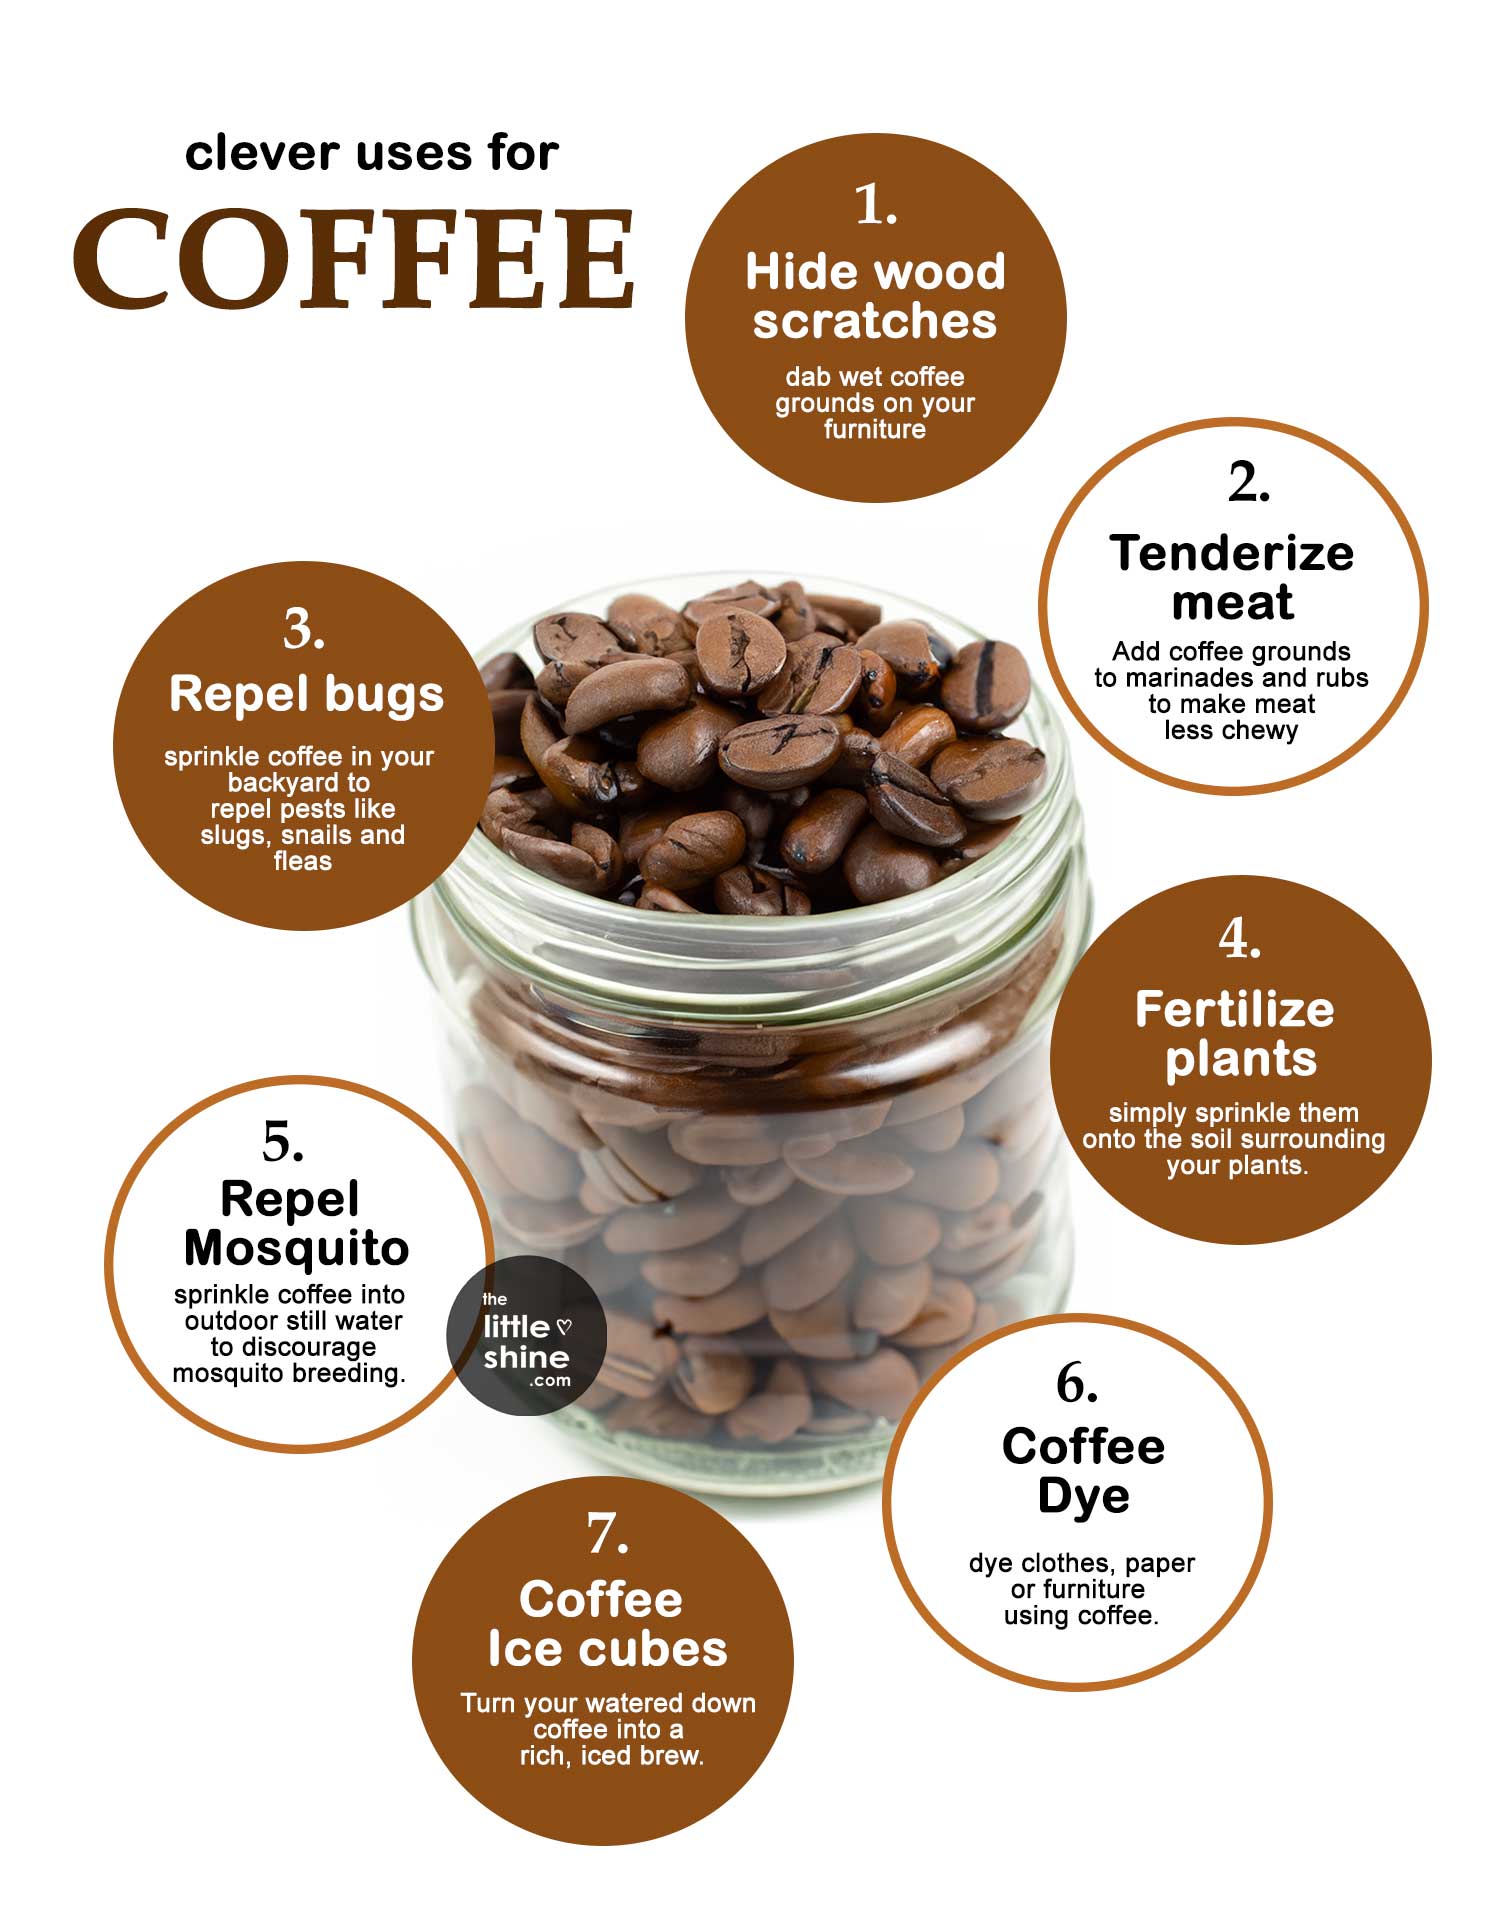 Amazing ways to use coffee and coffee grounds